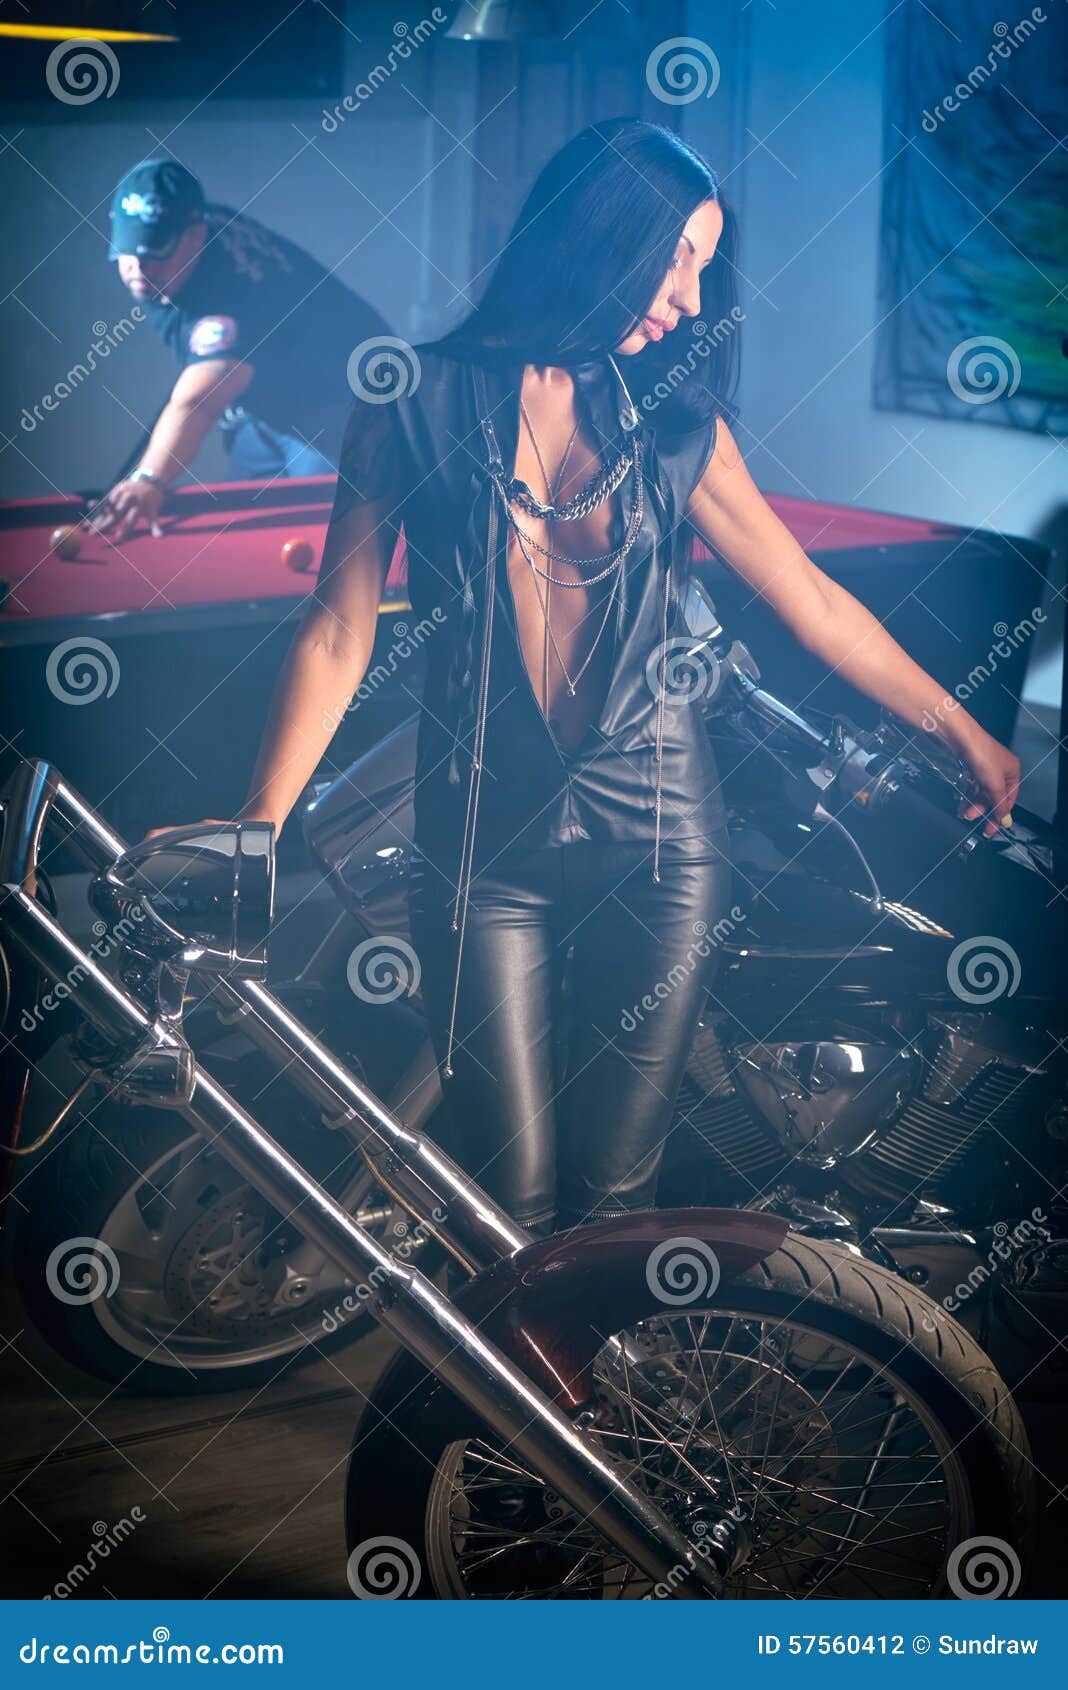 woman posing near motorbikes, man playing billiards